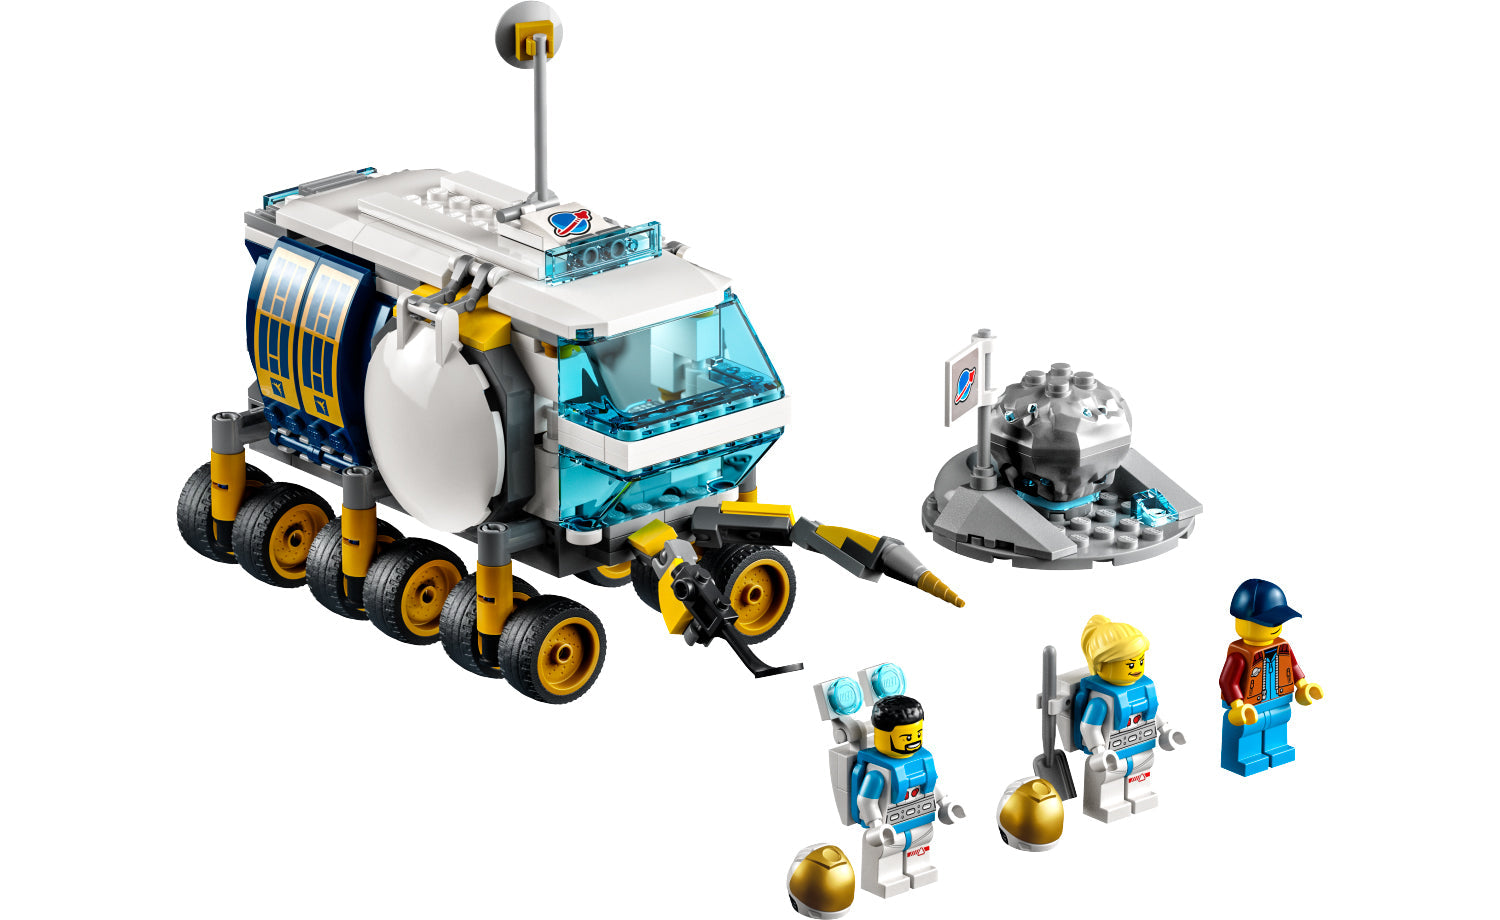 LEGO® City Lunar Roving Vehicle 60348